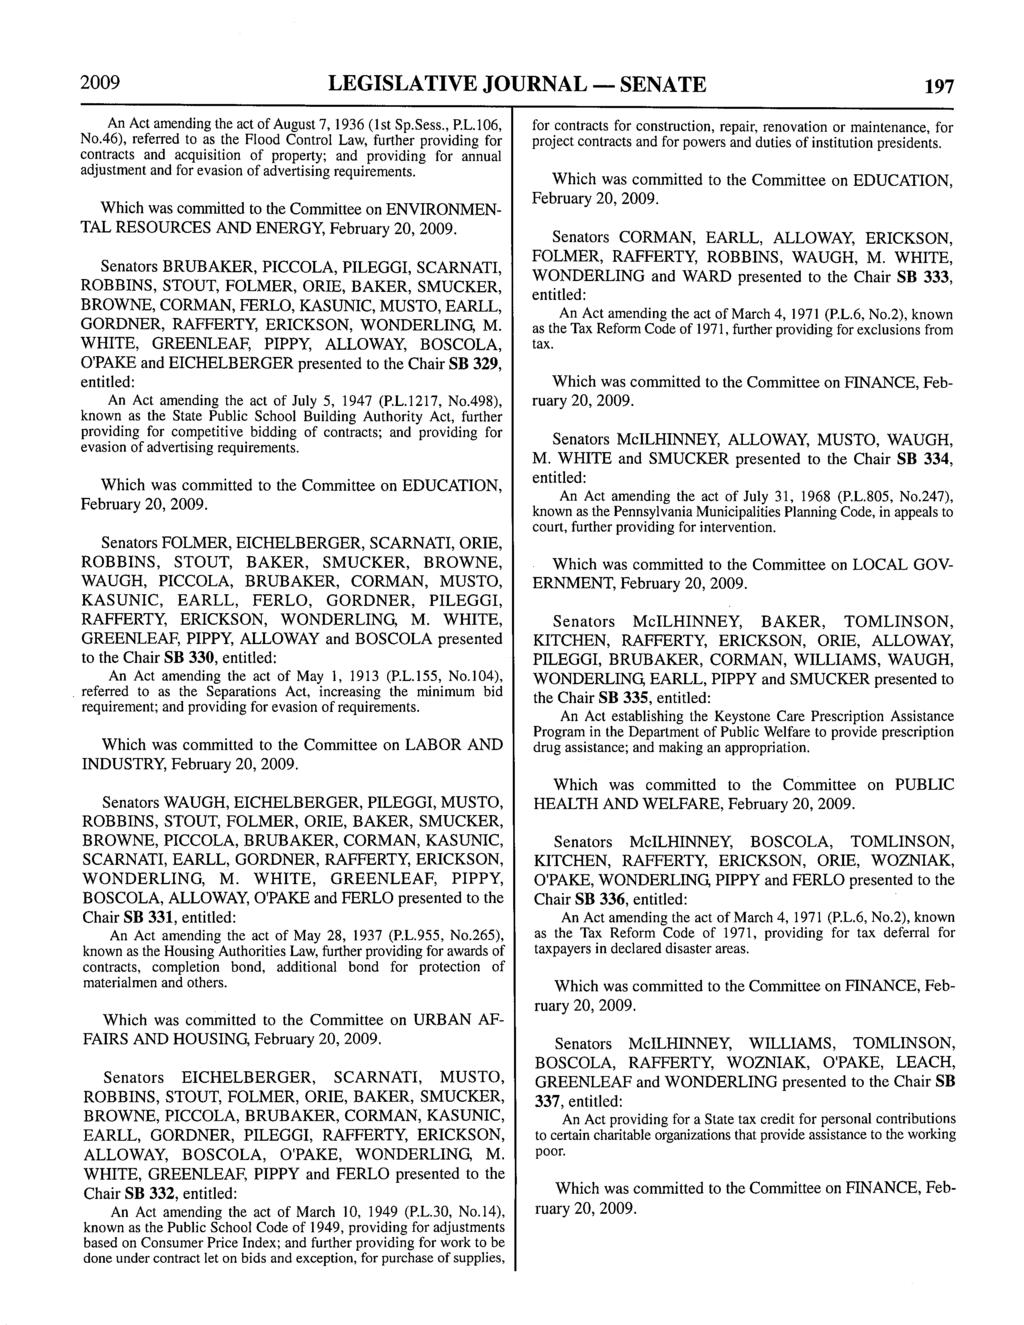 2009 LEGISLATIVE JOURNAL - SENATE 197 An Act amending the act of August 7, 1936 (1st Sp.Sess., P.L.106, No.